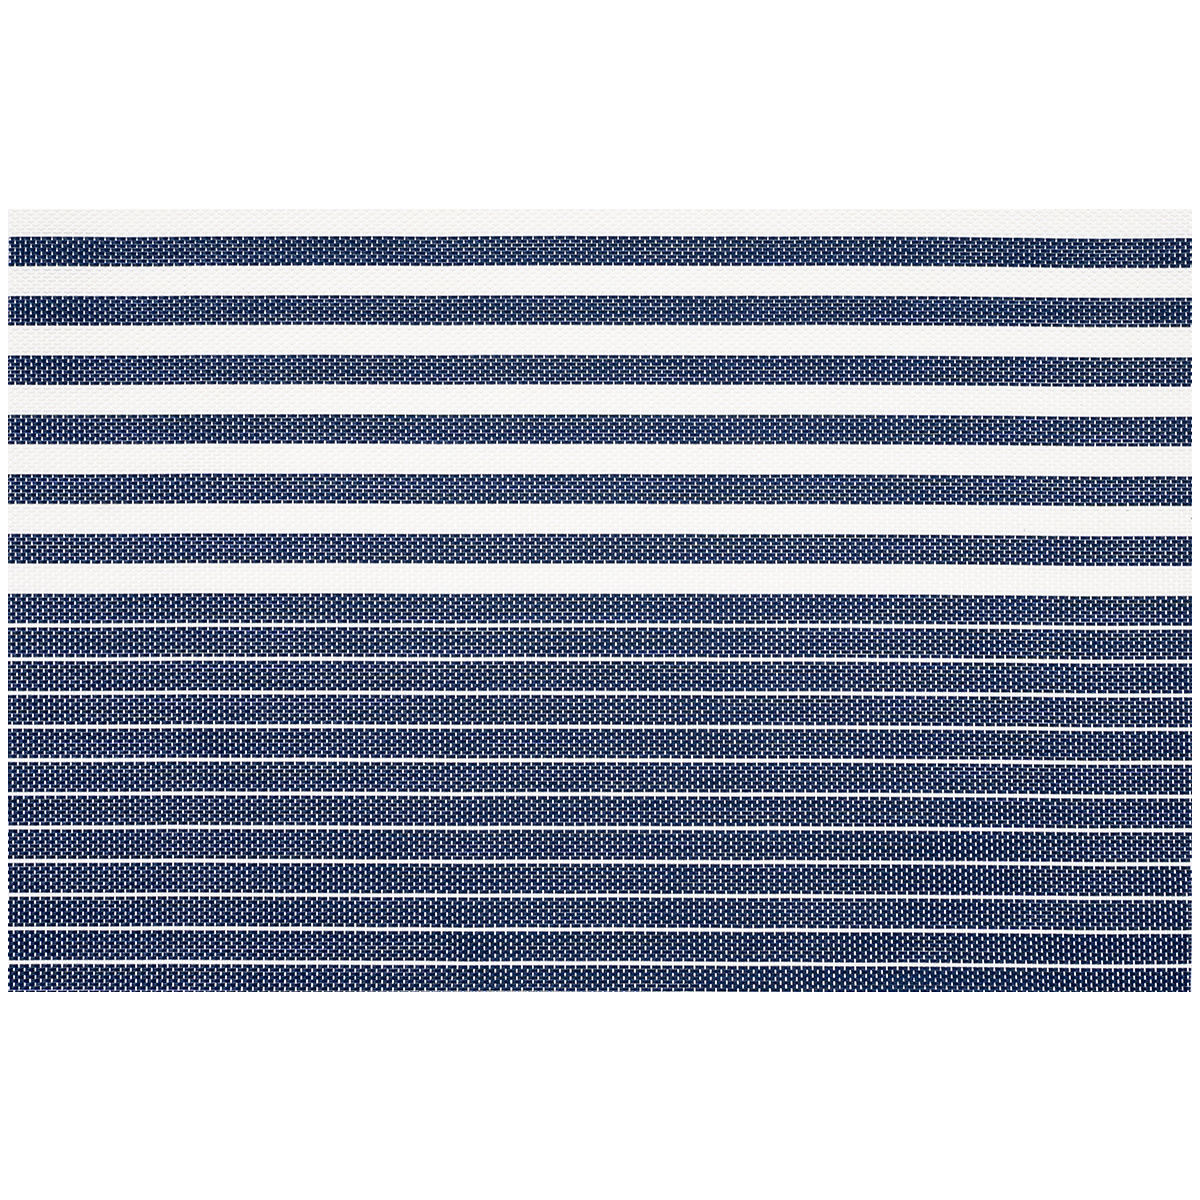 Suport farfurie Stripe albastru inchis, 30 x 45 cm, set 4 buc. Albastru